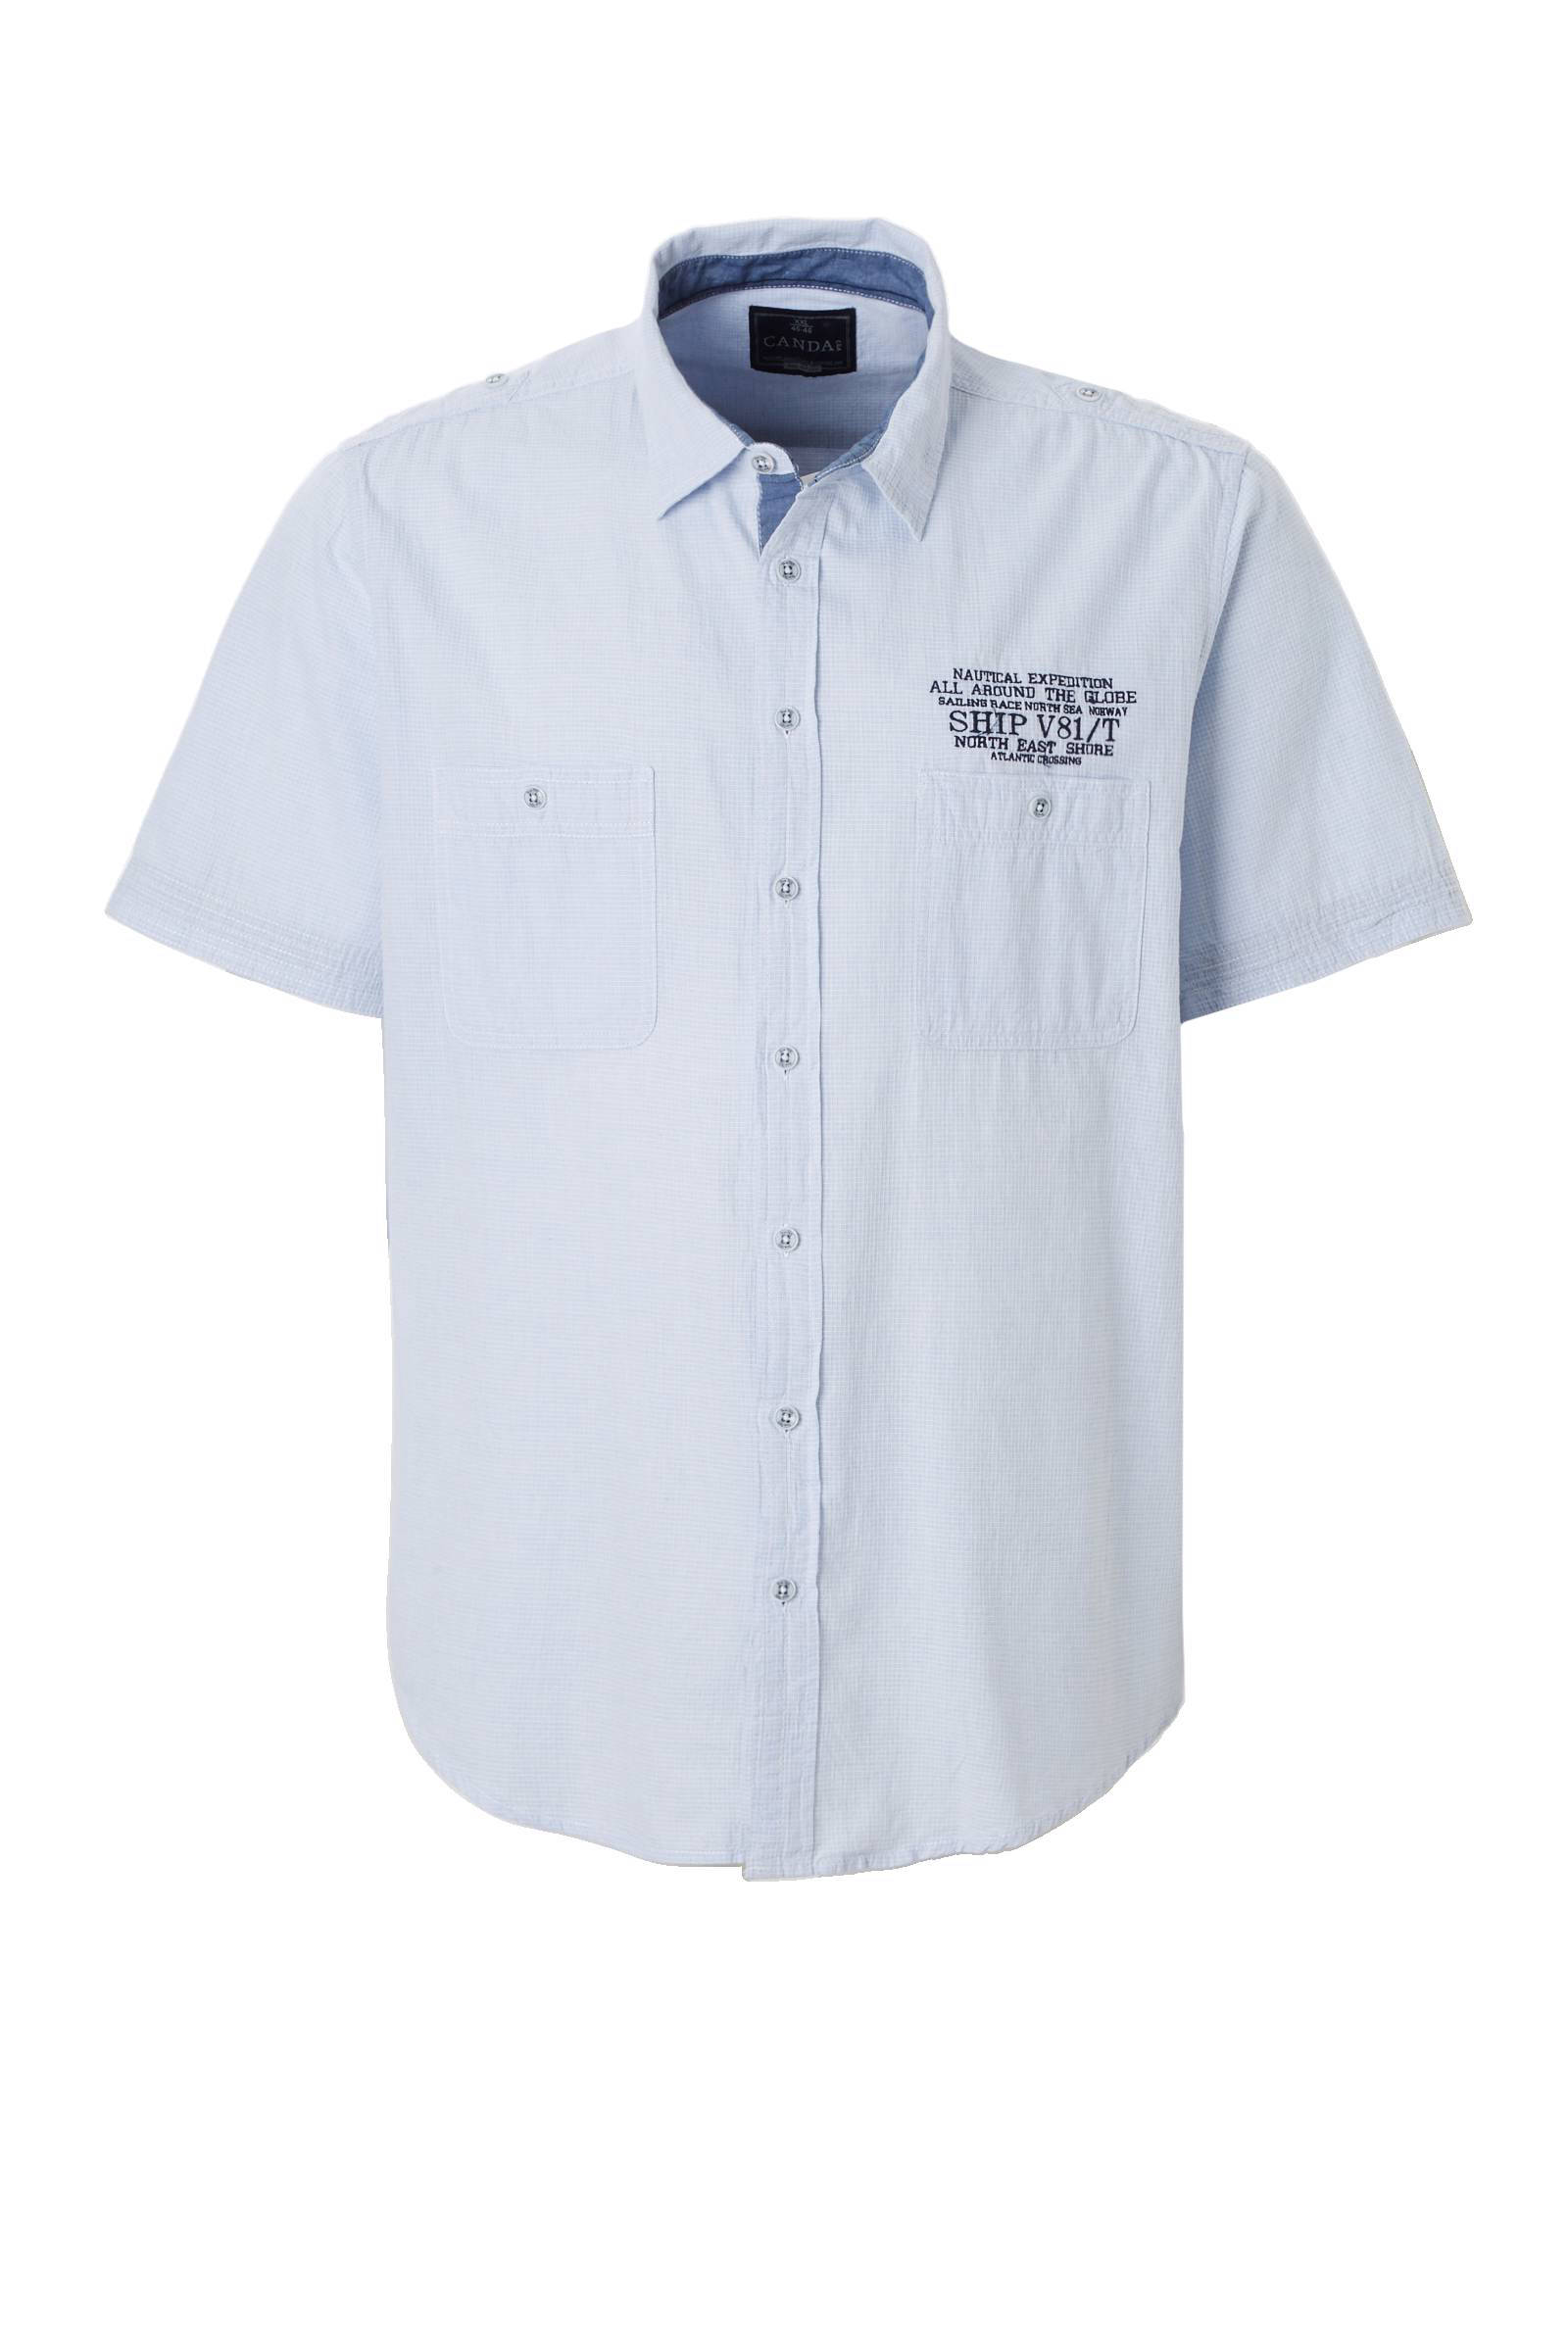 Tommy Hilfiger Core Premium Regular Polo Shirt T-Shirt Herren Weiß 867878433 100